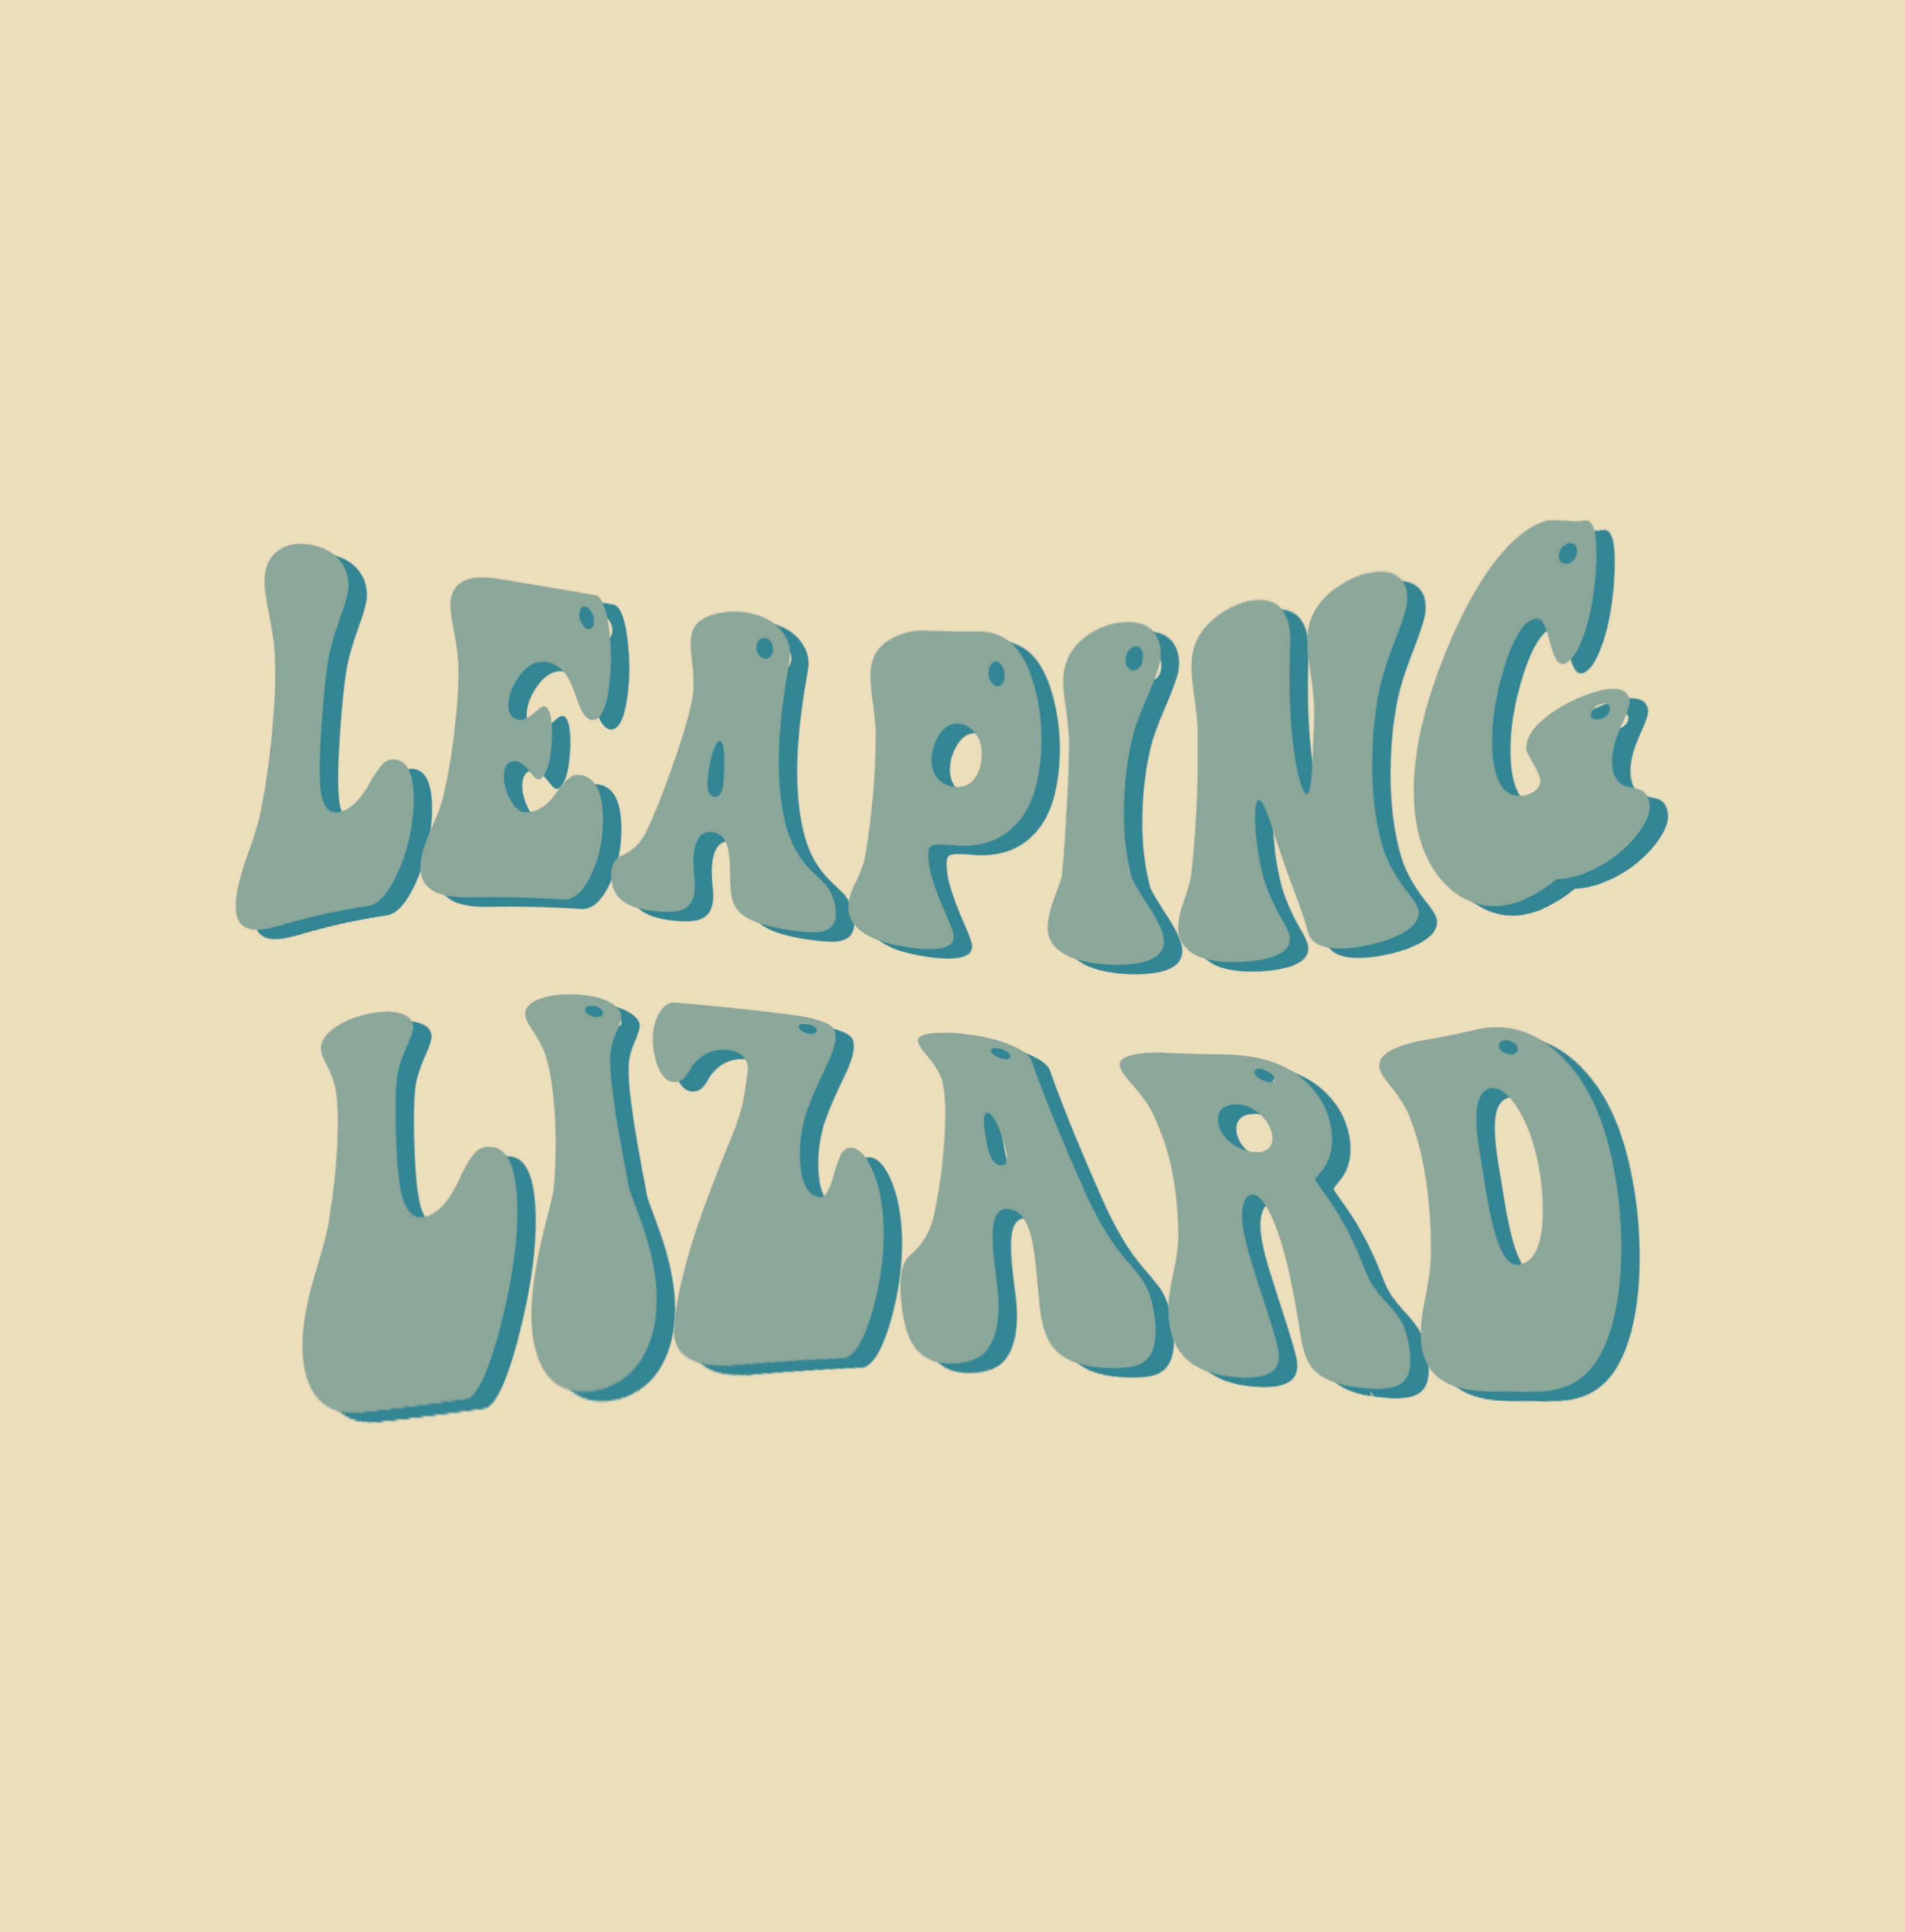 Leaping lizard